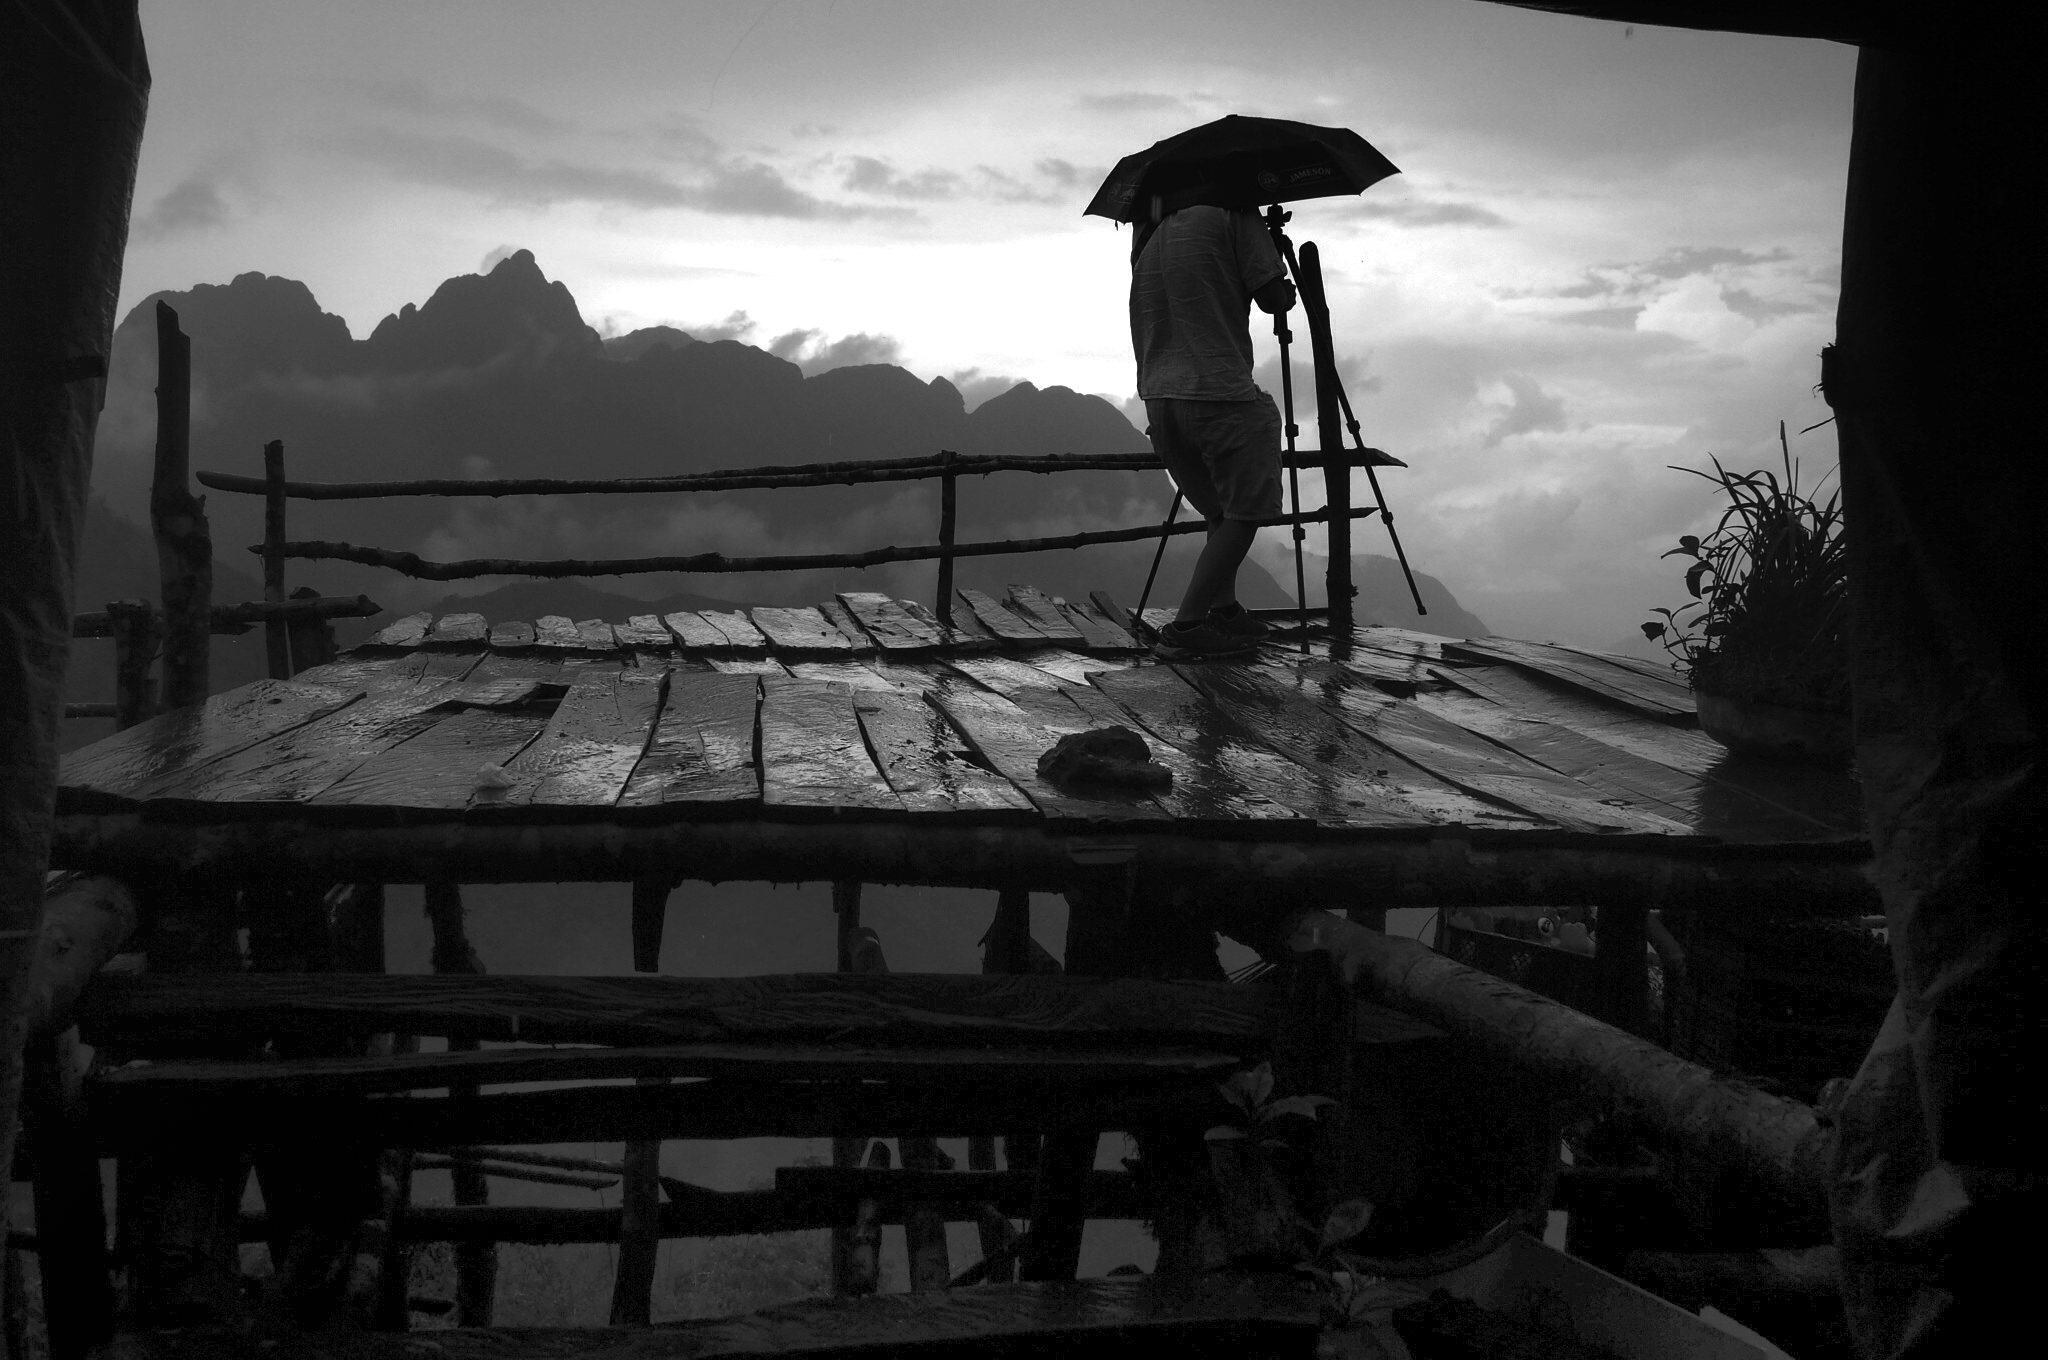 photographer shields himself from the rain in Sapa, northern Vietnam